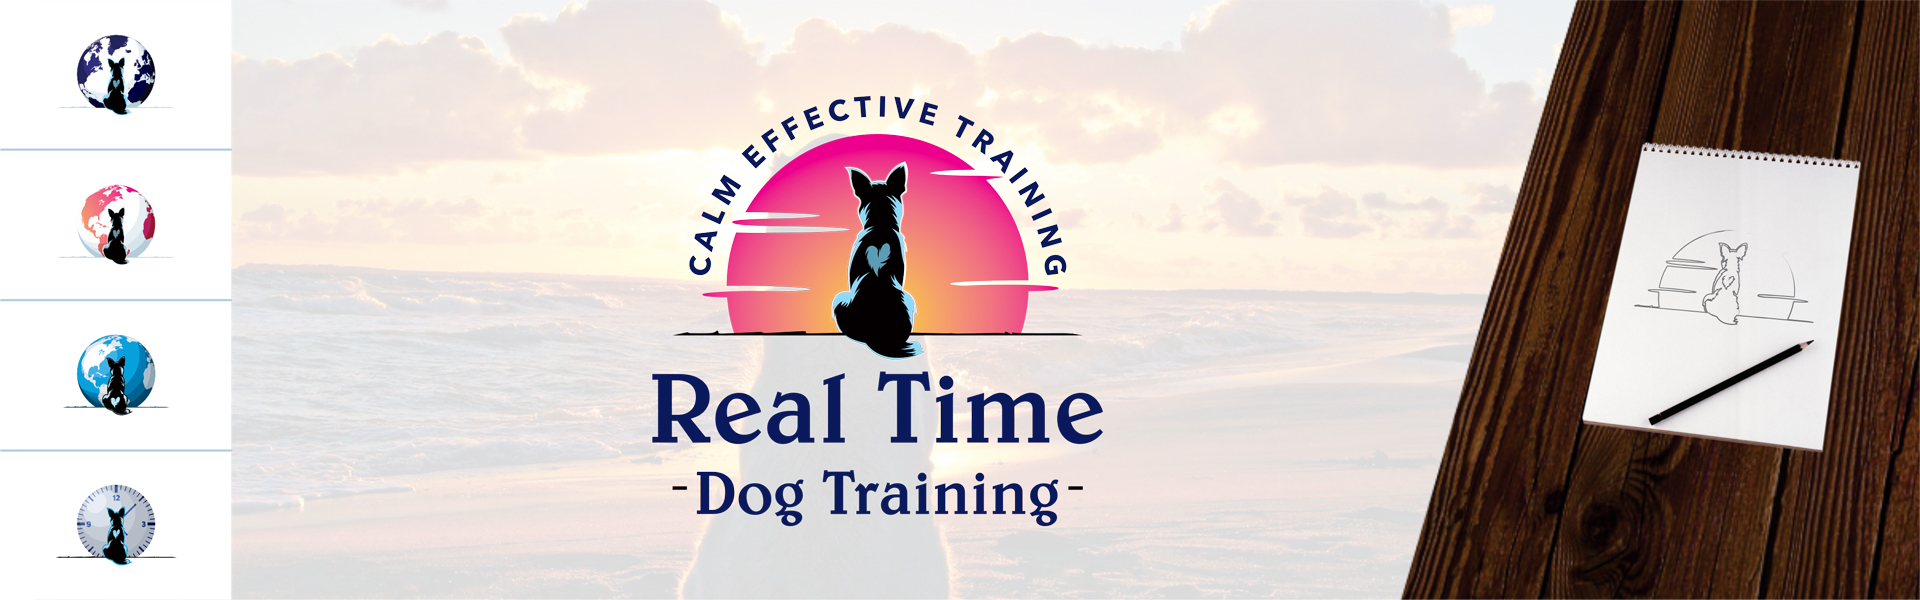 dog training logo design